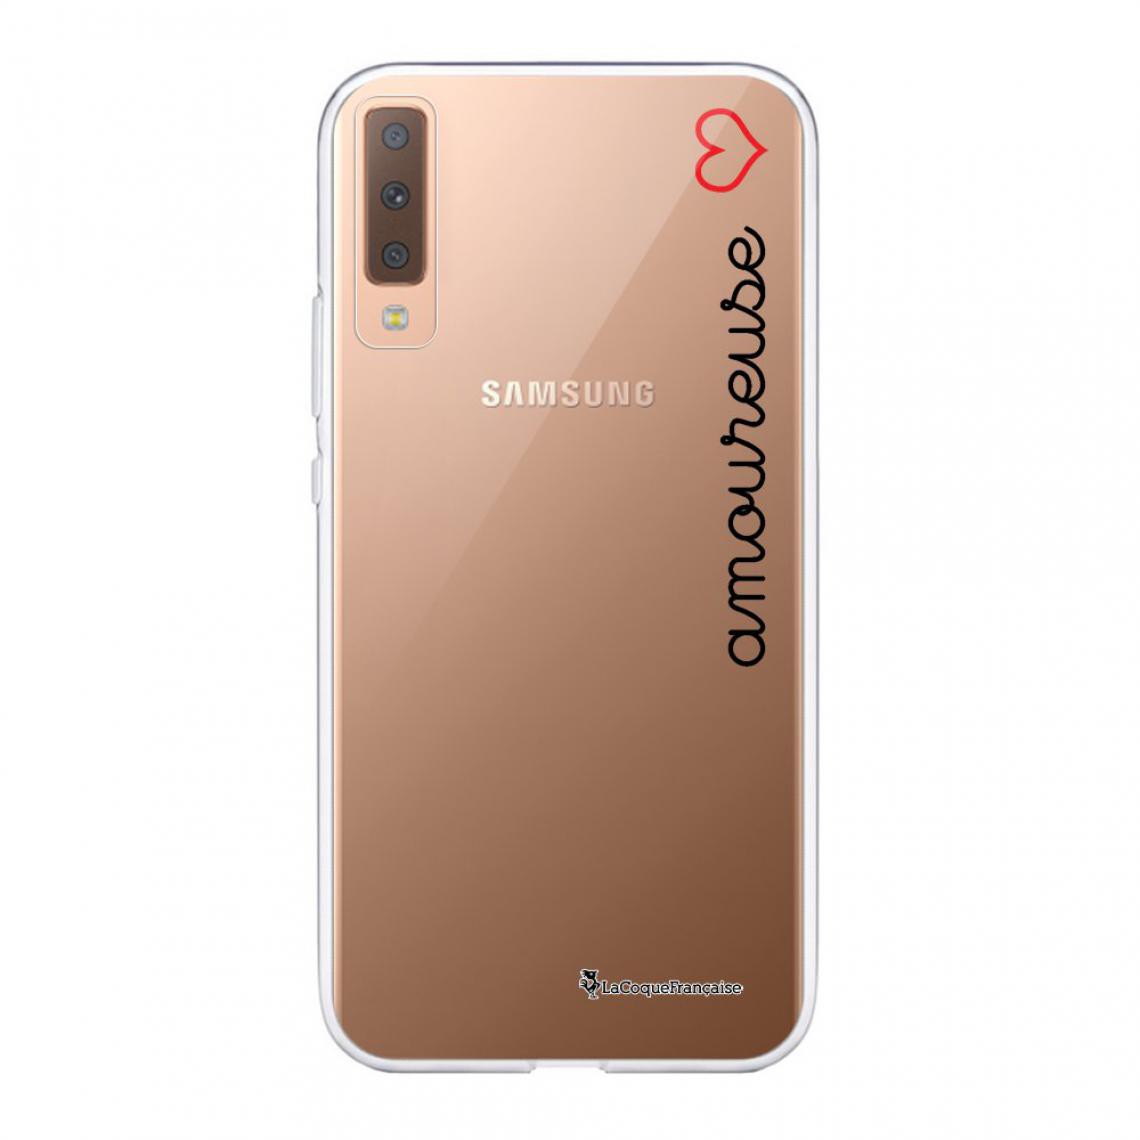 La Coque Francaise - Coque Samsung Galaxy A7 2018 souple silicone transparente - Coque, étui smartphone